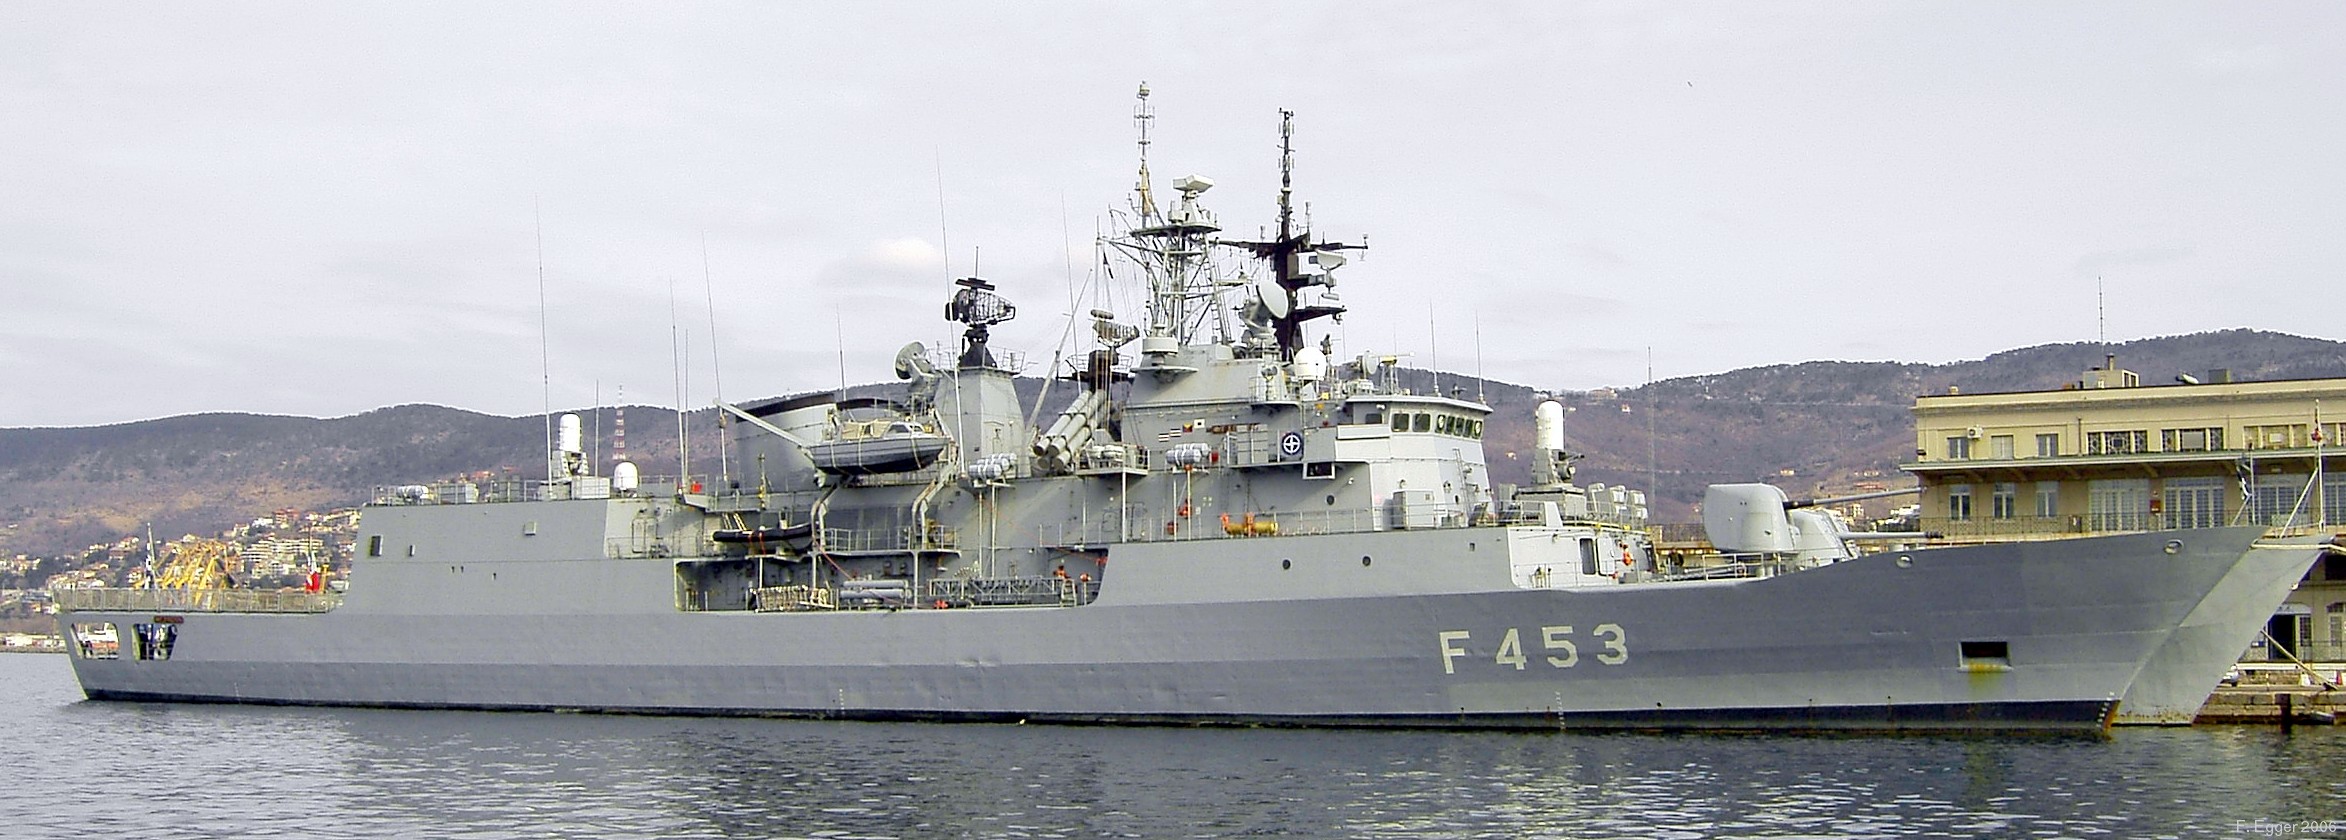 f 453 hs spetsai hydra class frigate meko-200hn hellenic navy greece 02 standing nato response force maritime group 2 snmg-2 trieste italy 2006